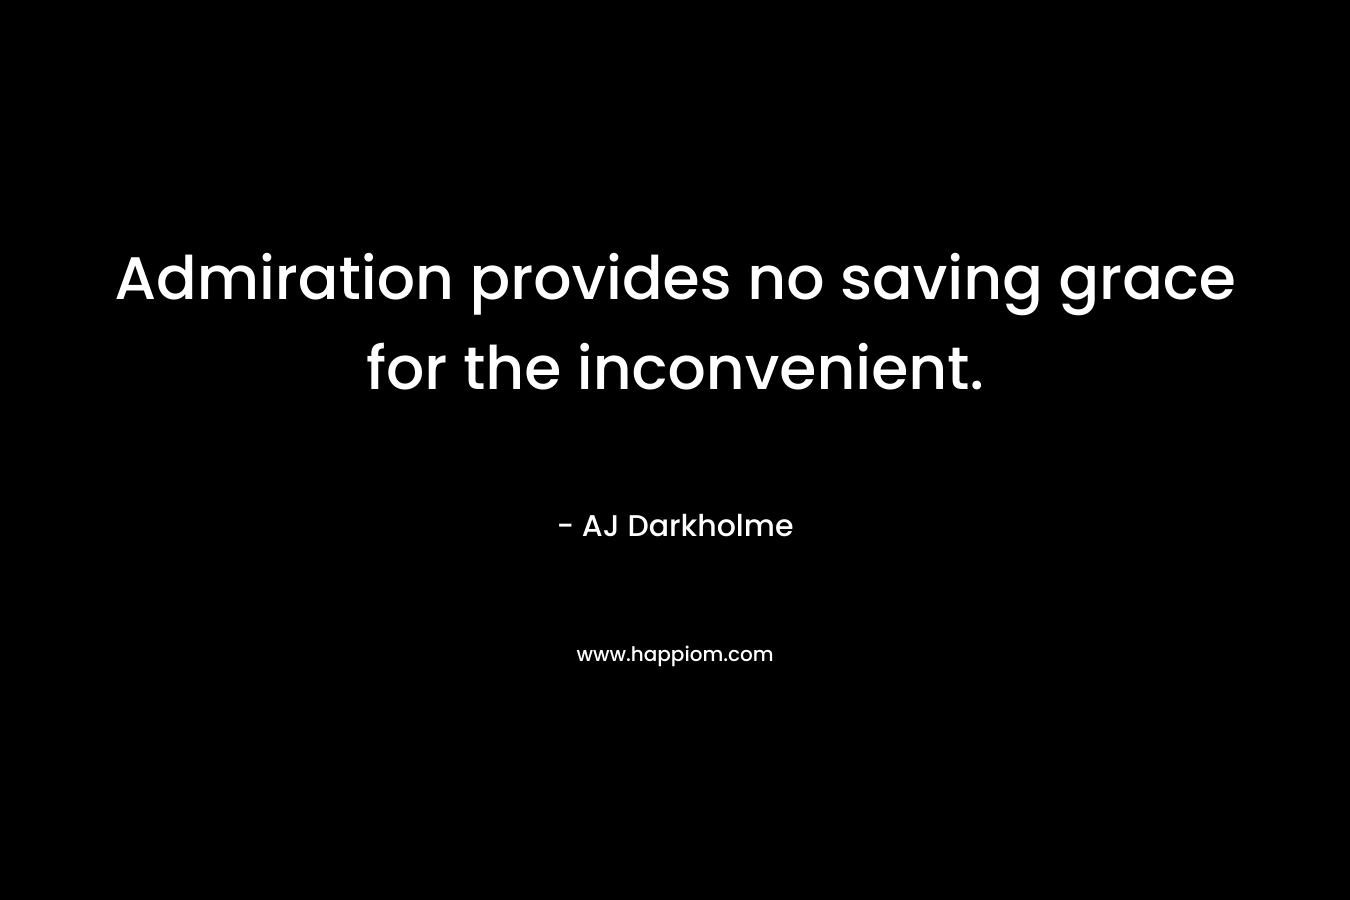 Admiration provides no saving grace for the inconvenient.